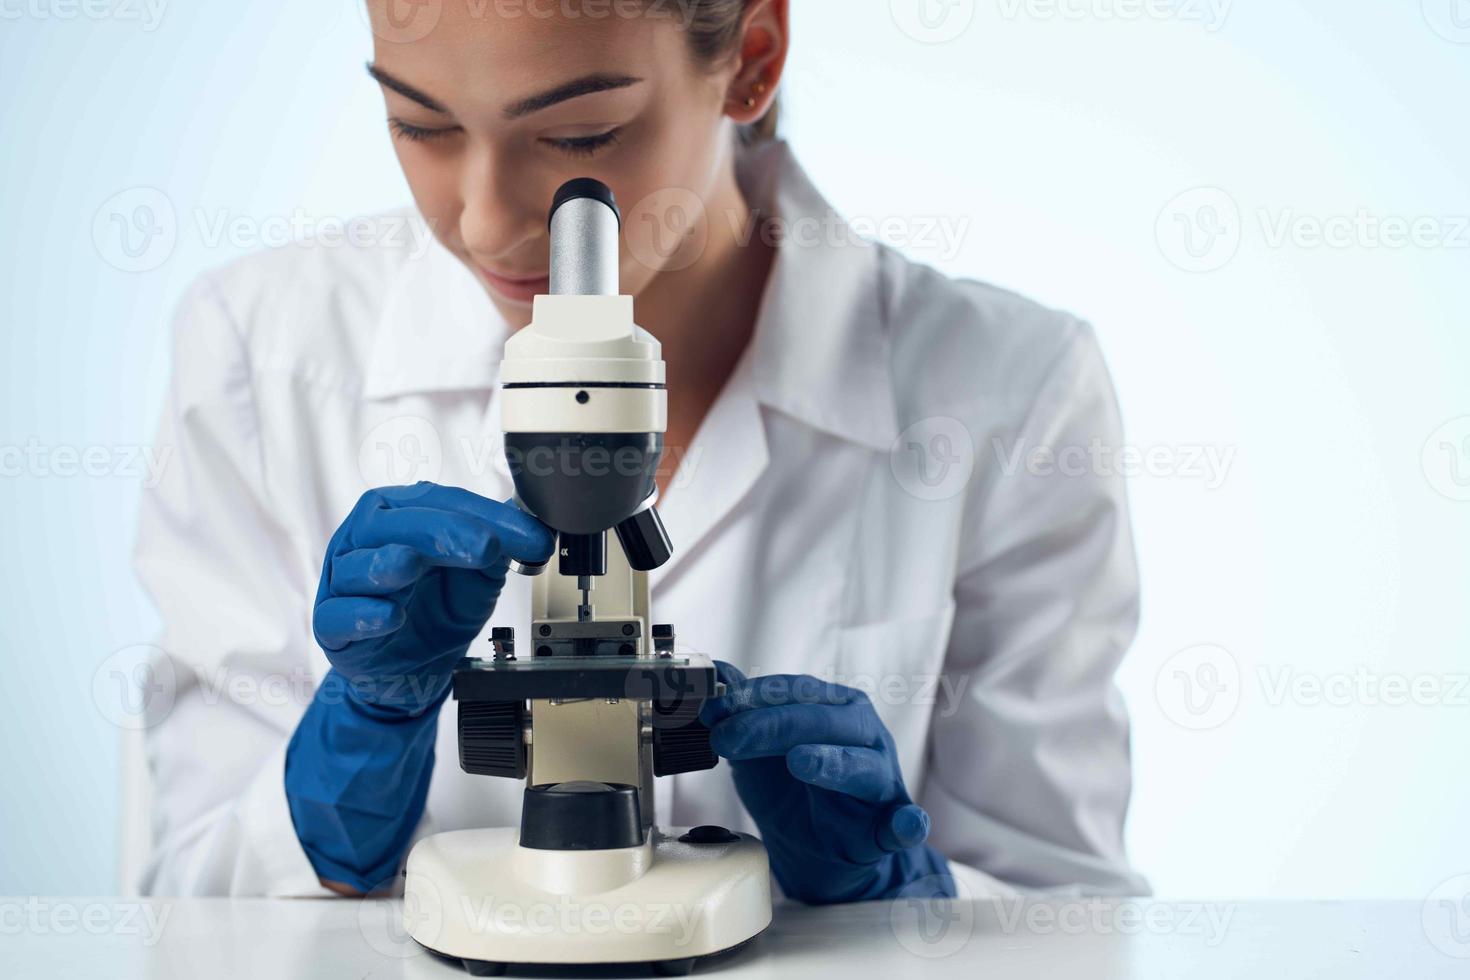 female doctor biology research technology laboratory microscope photo